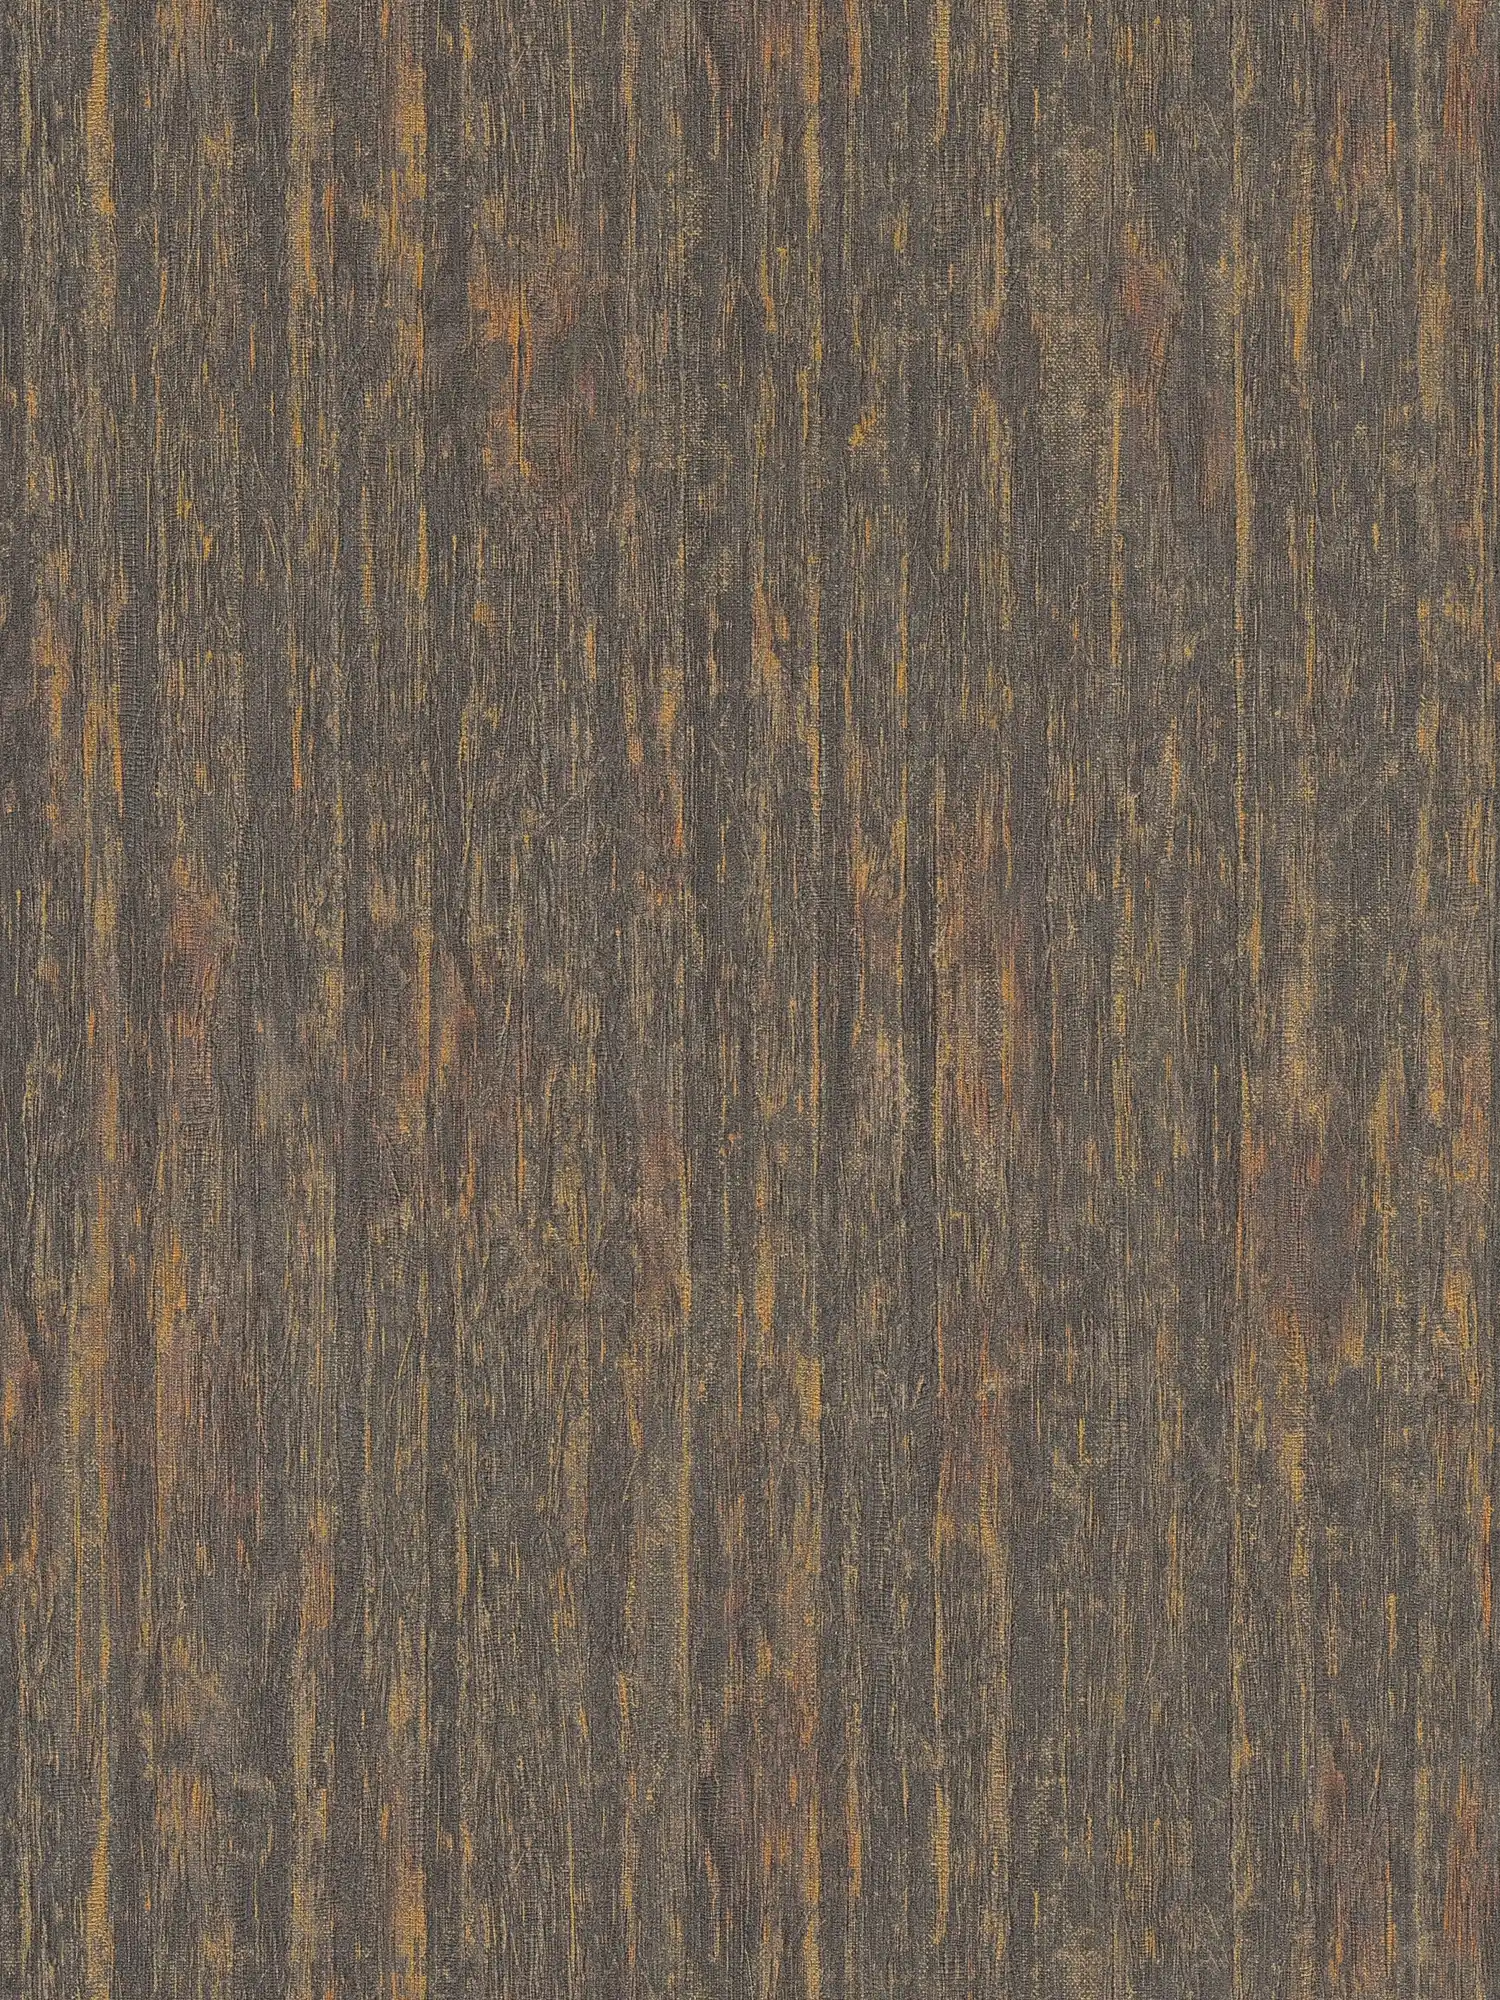 Non-woven wallpaper with wavy line pattern - black, orange, bronze
